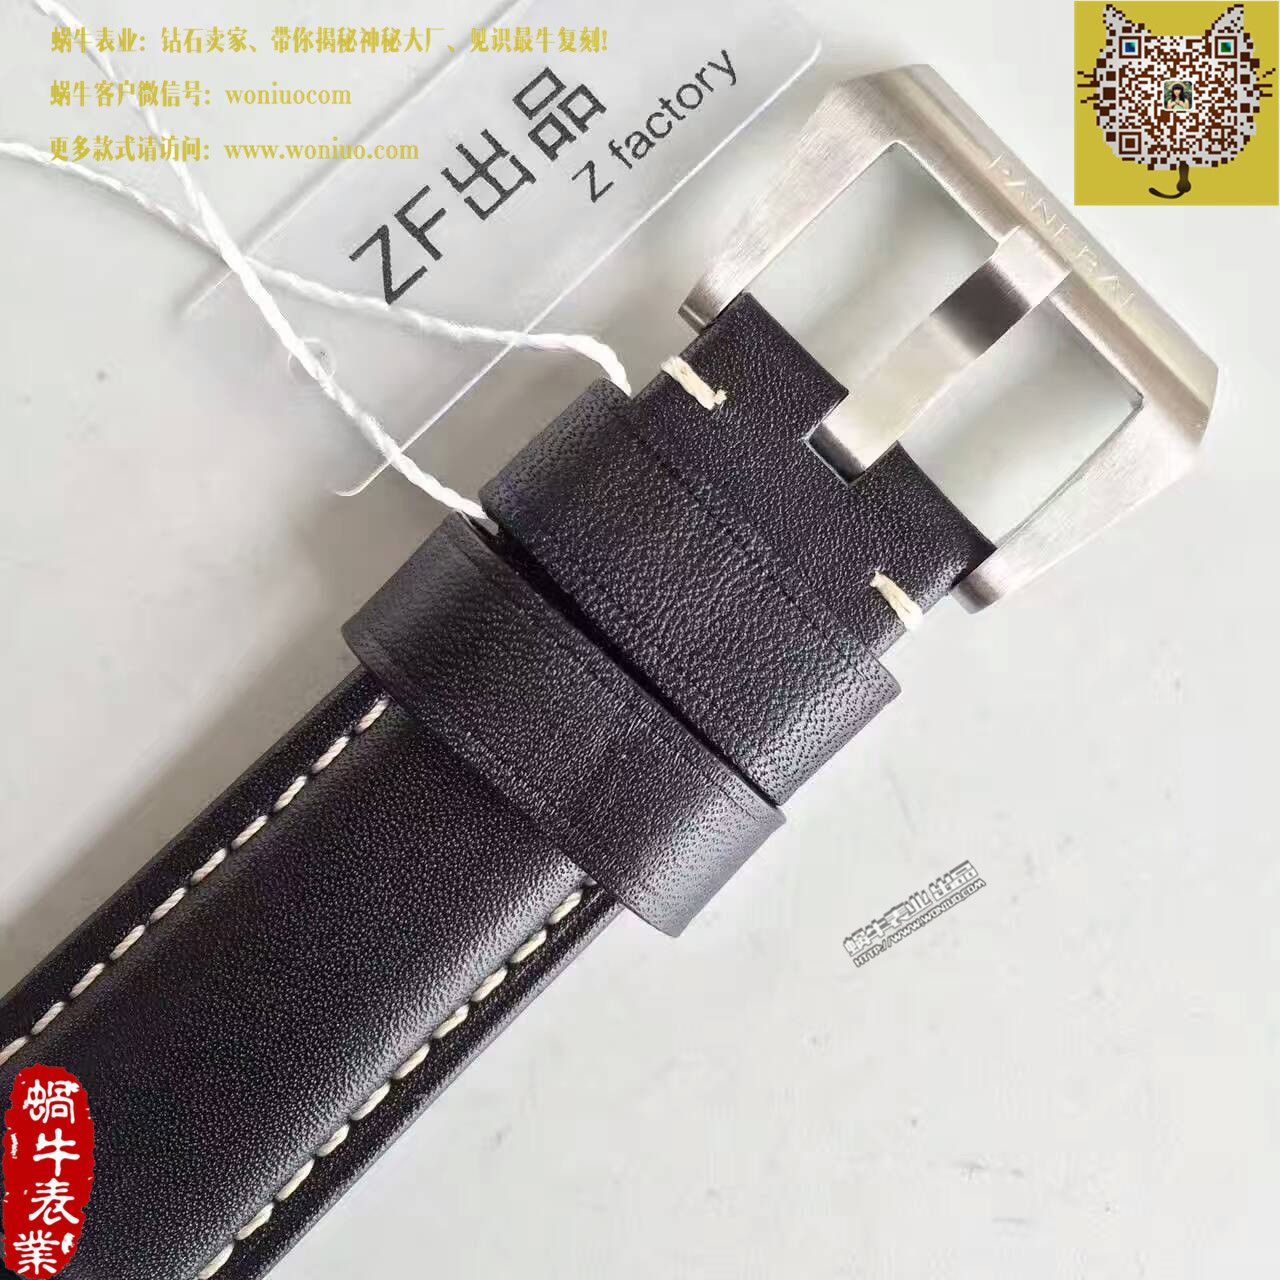 【ZF厂1:1超A高仿手表】沛纳海LUMINOR 1950系列PAM01359腕表 